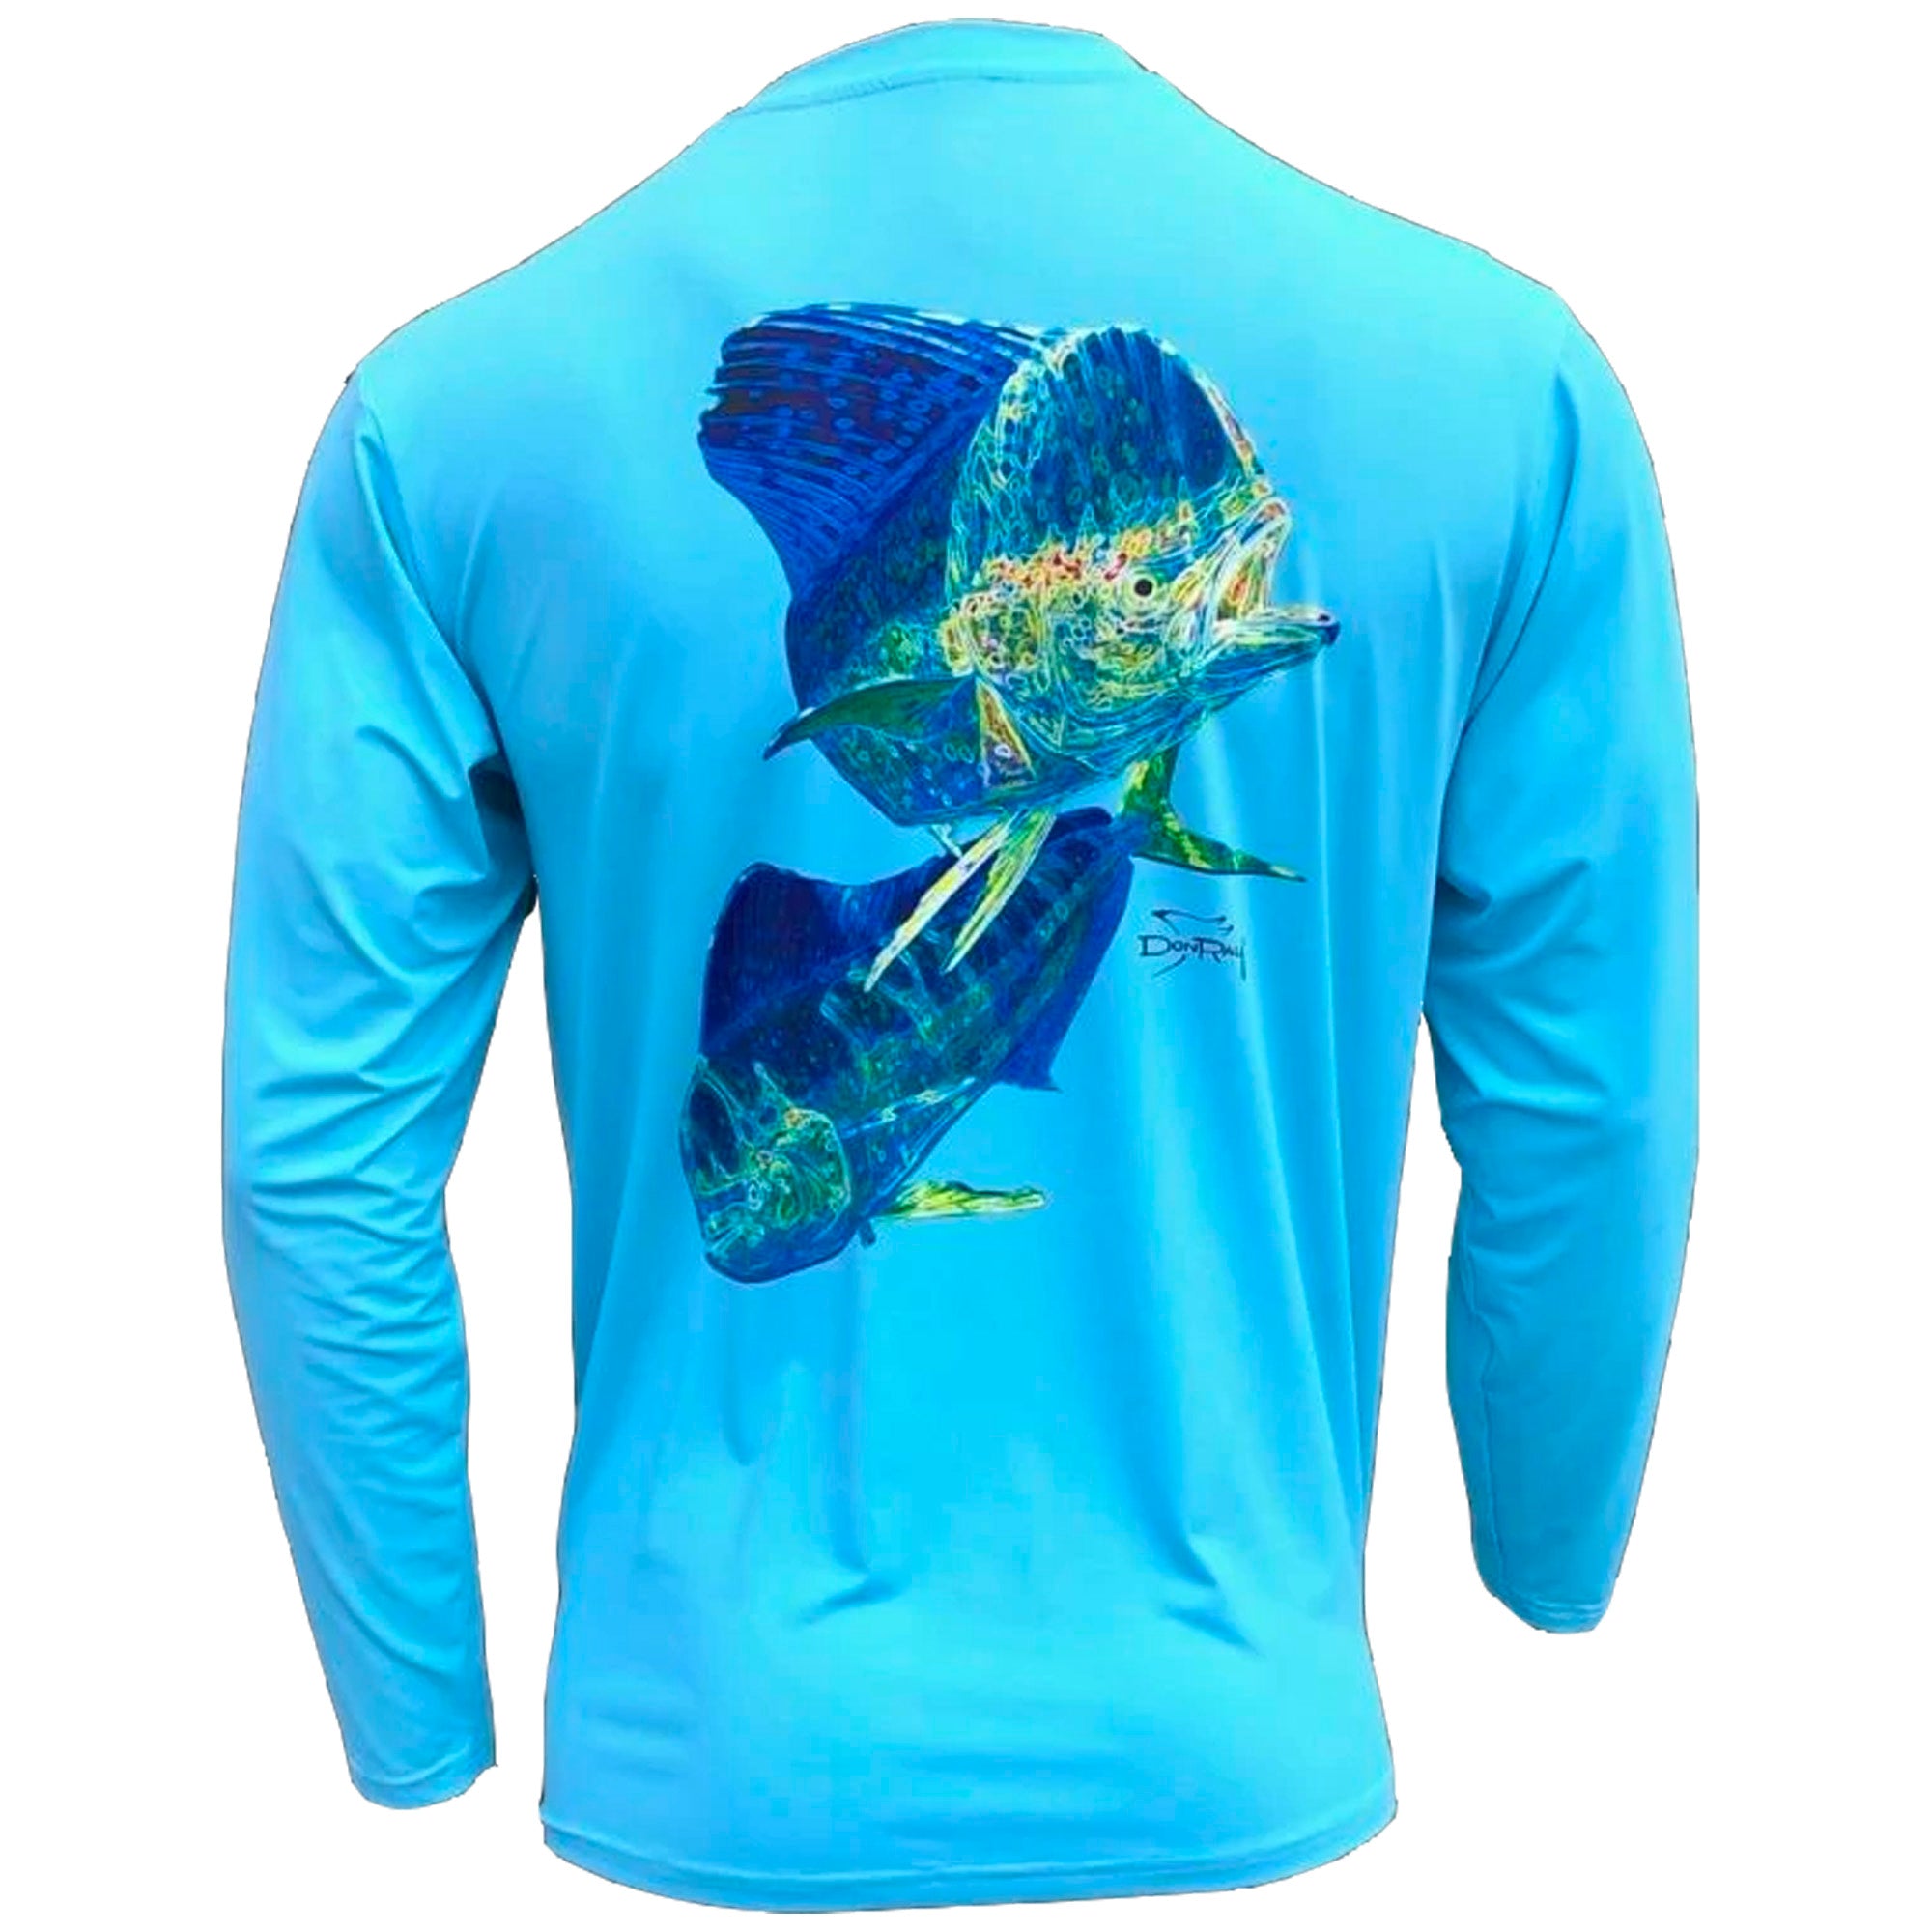 Men's Performance Shirt - Electrified Mahi, Blue / L